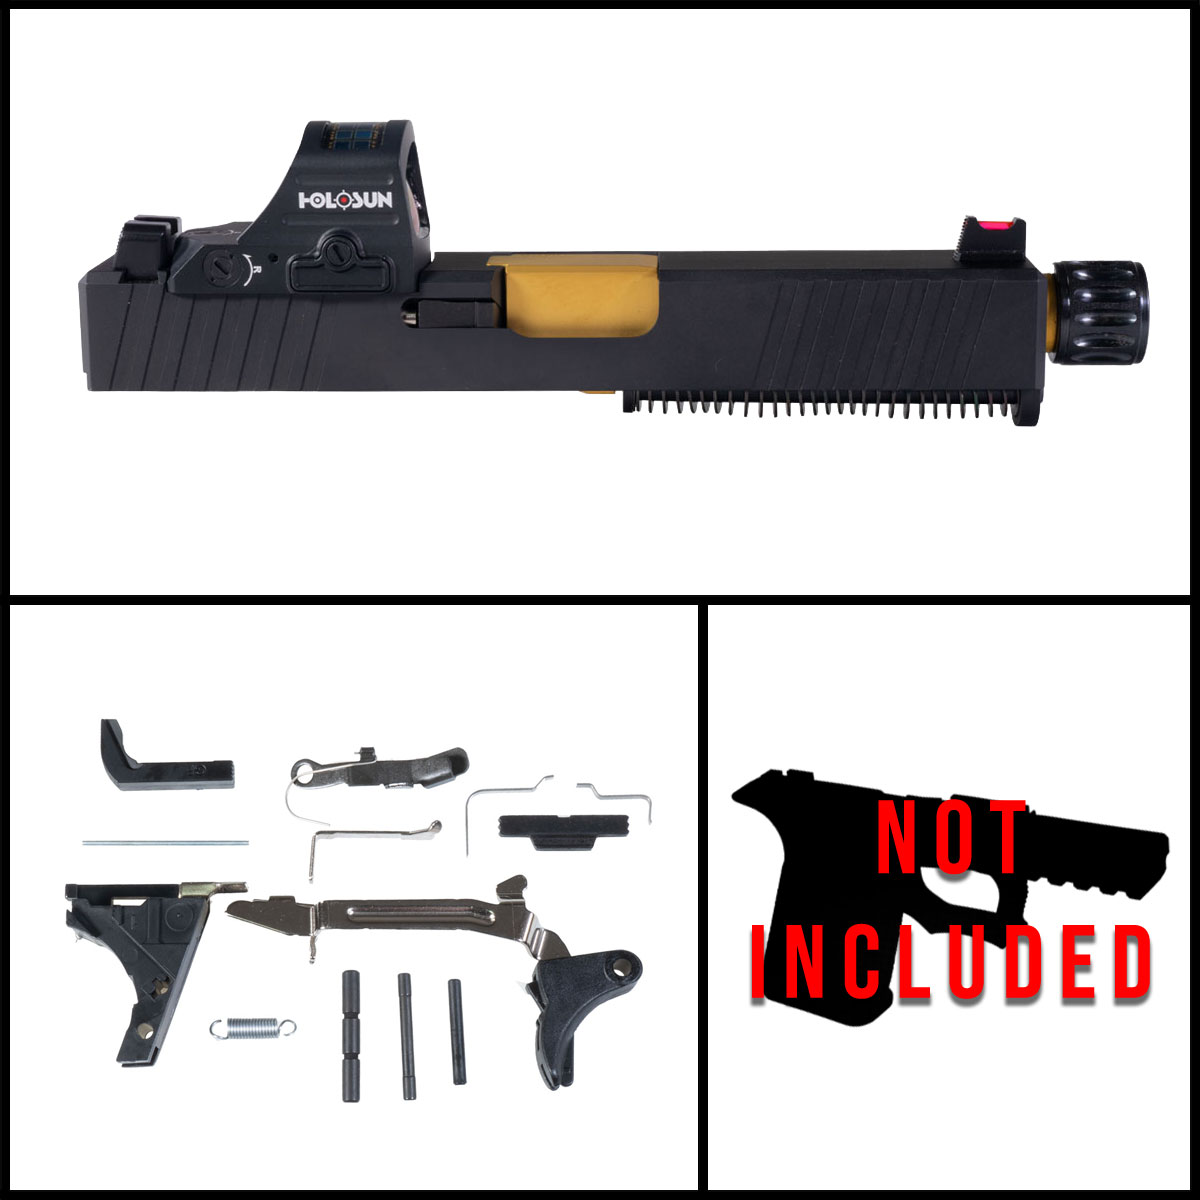 OTD 'Cogito w/ HS507C-X2 Red Dot' 9mm Full Pistol Build Kit (Everything Minus Frame) - Glock 19 Gen 1-3 Compatible